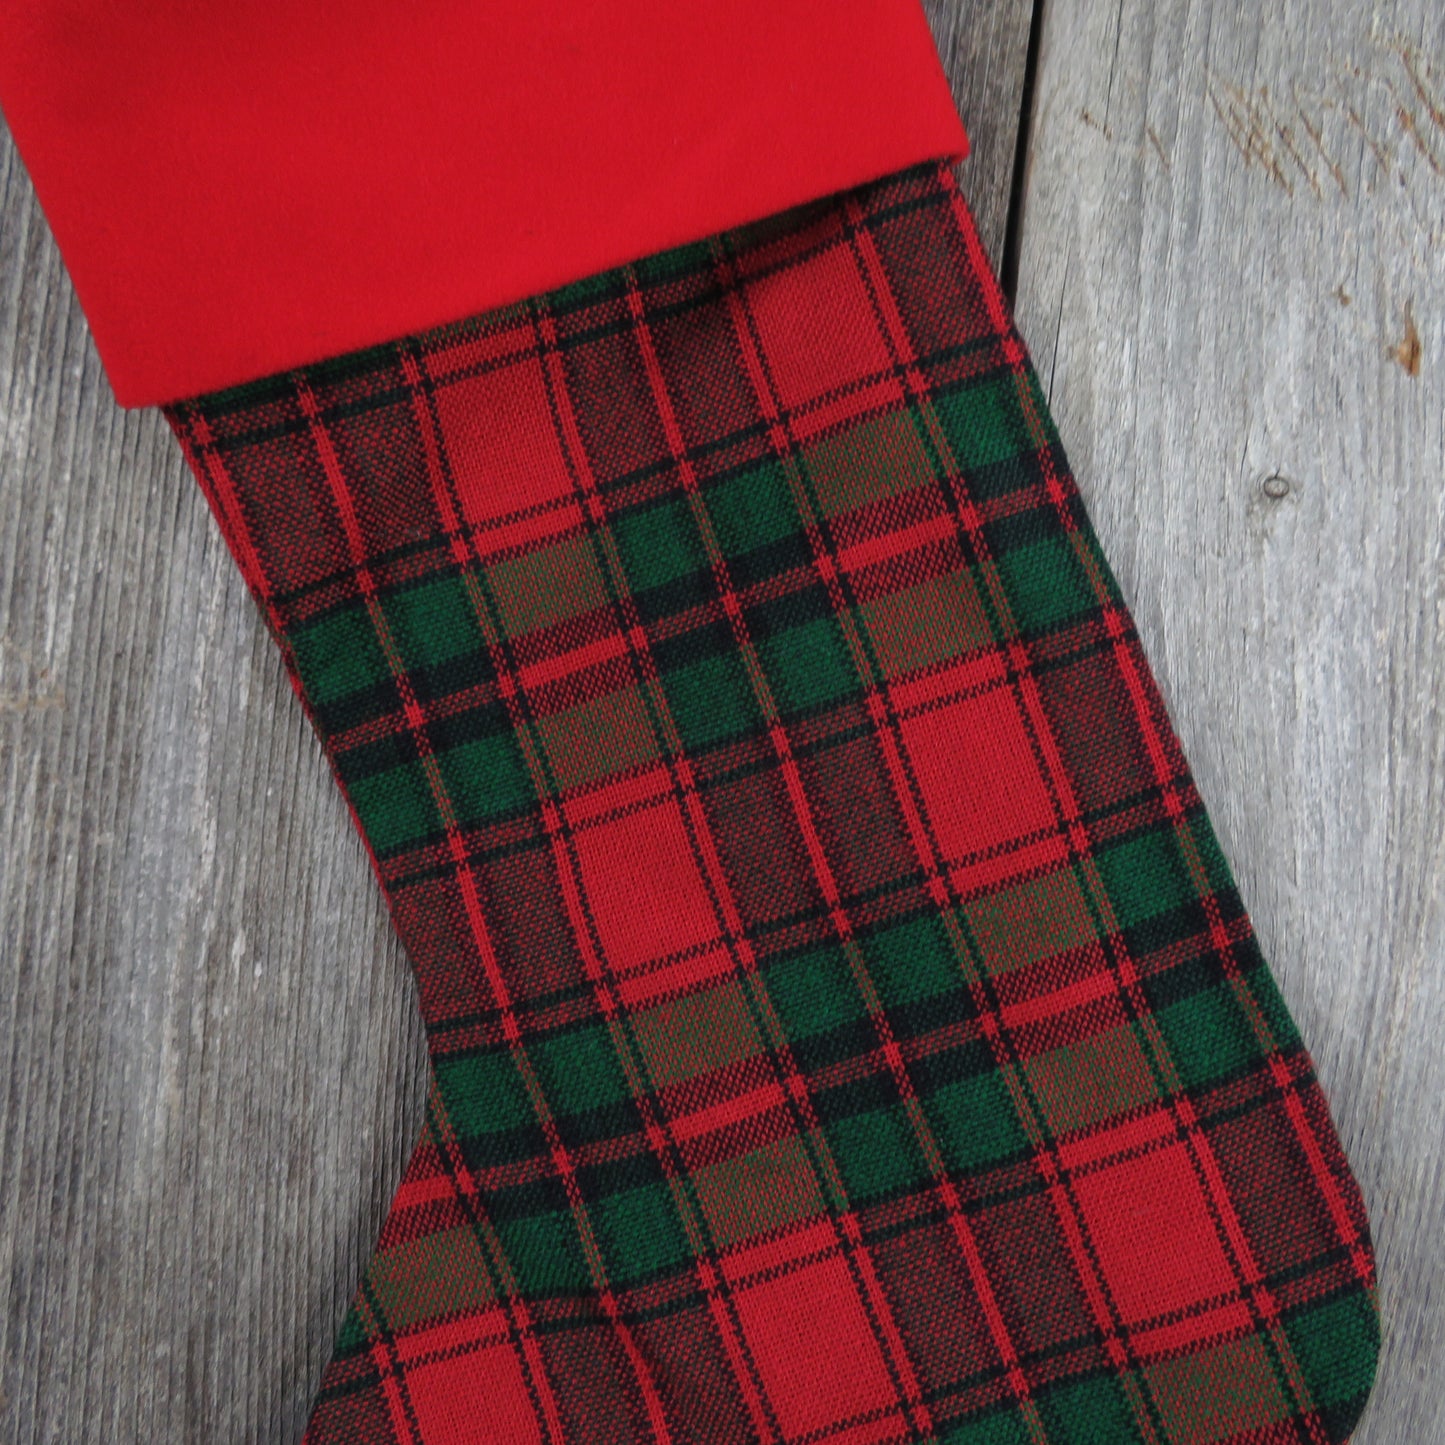 Vintage Plaid Christmas Stocking Fabric Santa Claus Applique Red Green Black - At Grandma's Table